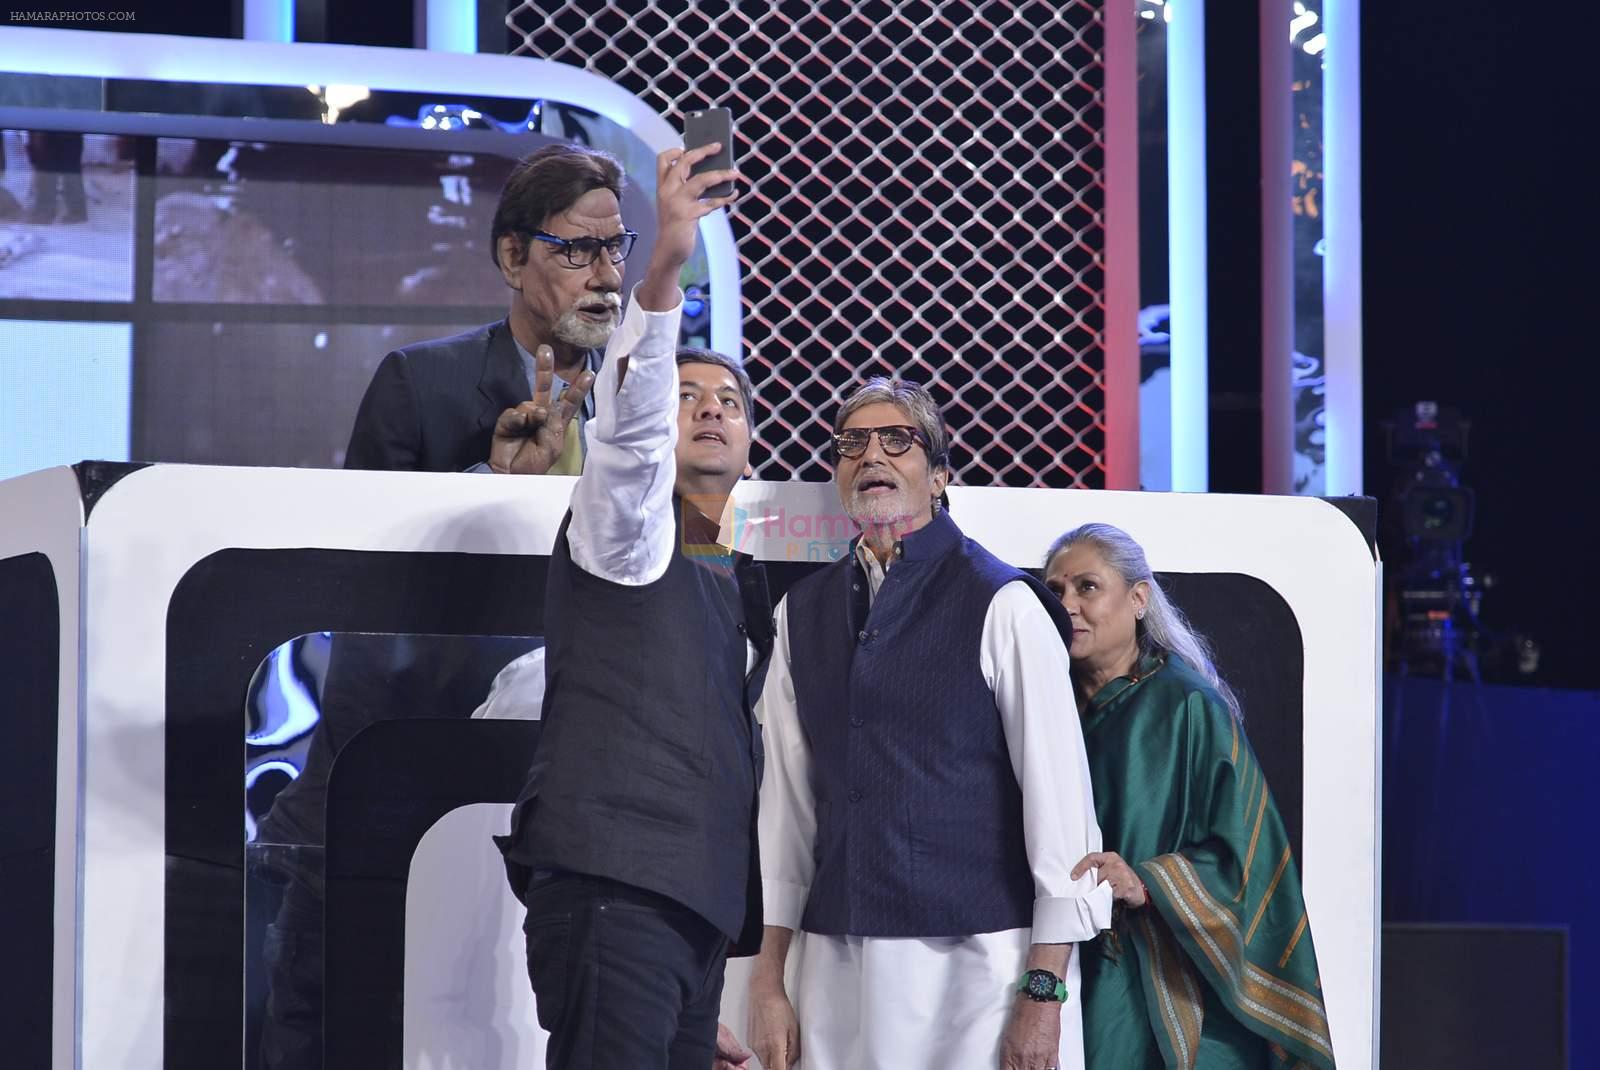 Amitabh Bachchan at NDTV Cleanathon on 17th Jan 2016